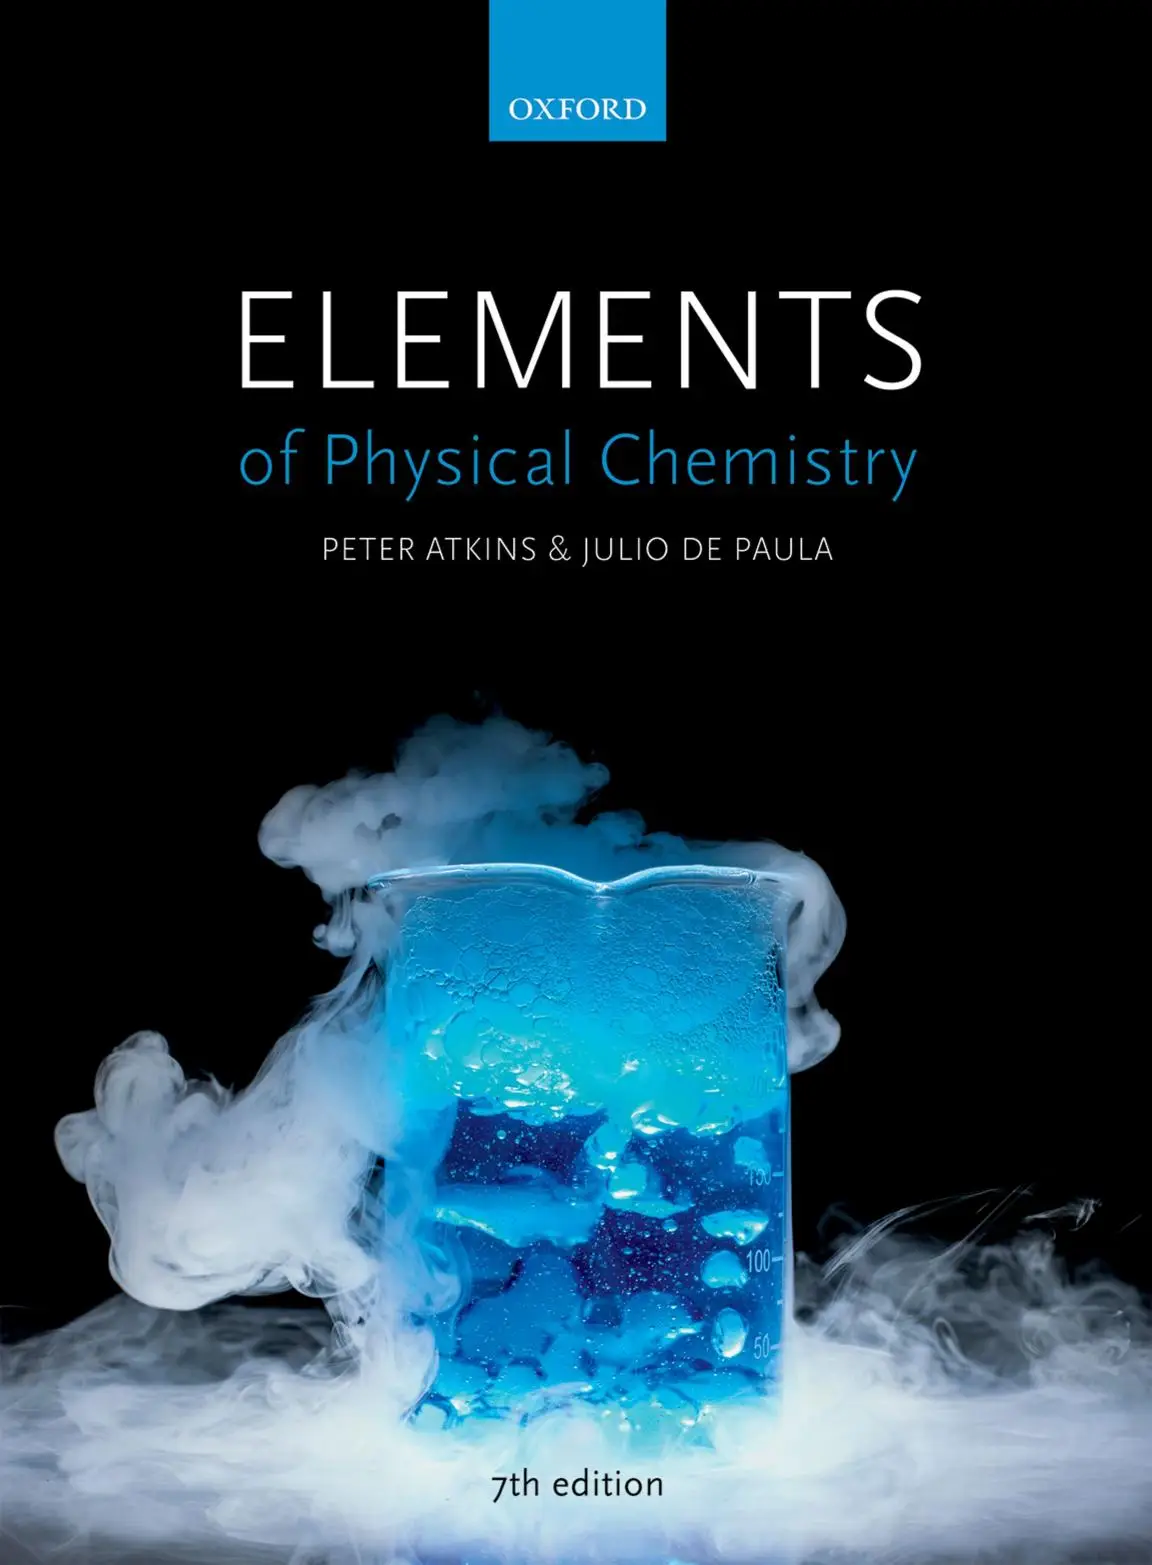 Physical chemistry. Elements of physical Chemistry Peter Atkins книга. Elements of physical Chemistry. Эткинс физическая химия.